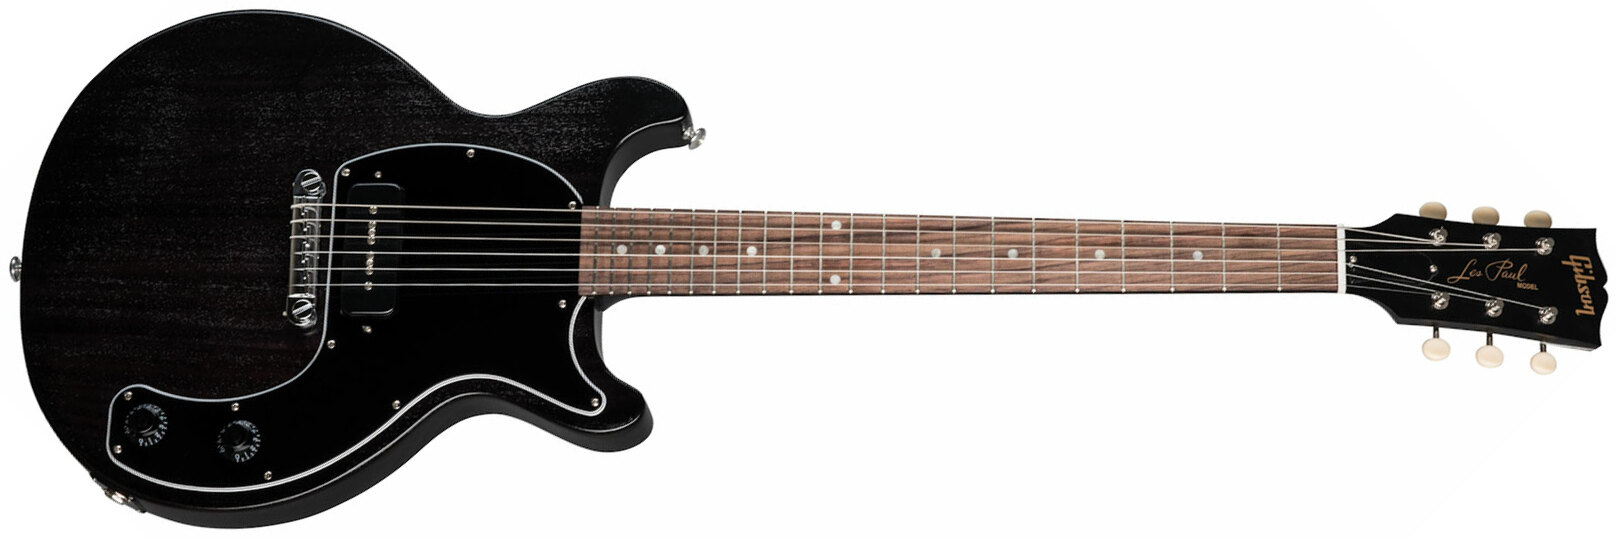 Gibson Les Paul Junior Tribute Dc Modern P90 - Worn Ebony - Double cut electric guitar - Main picture